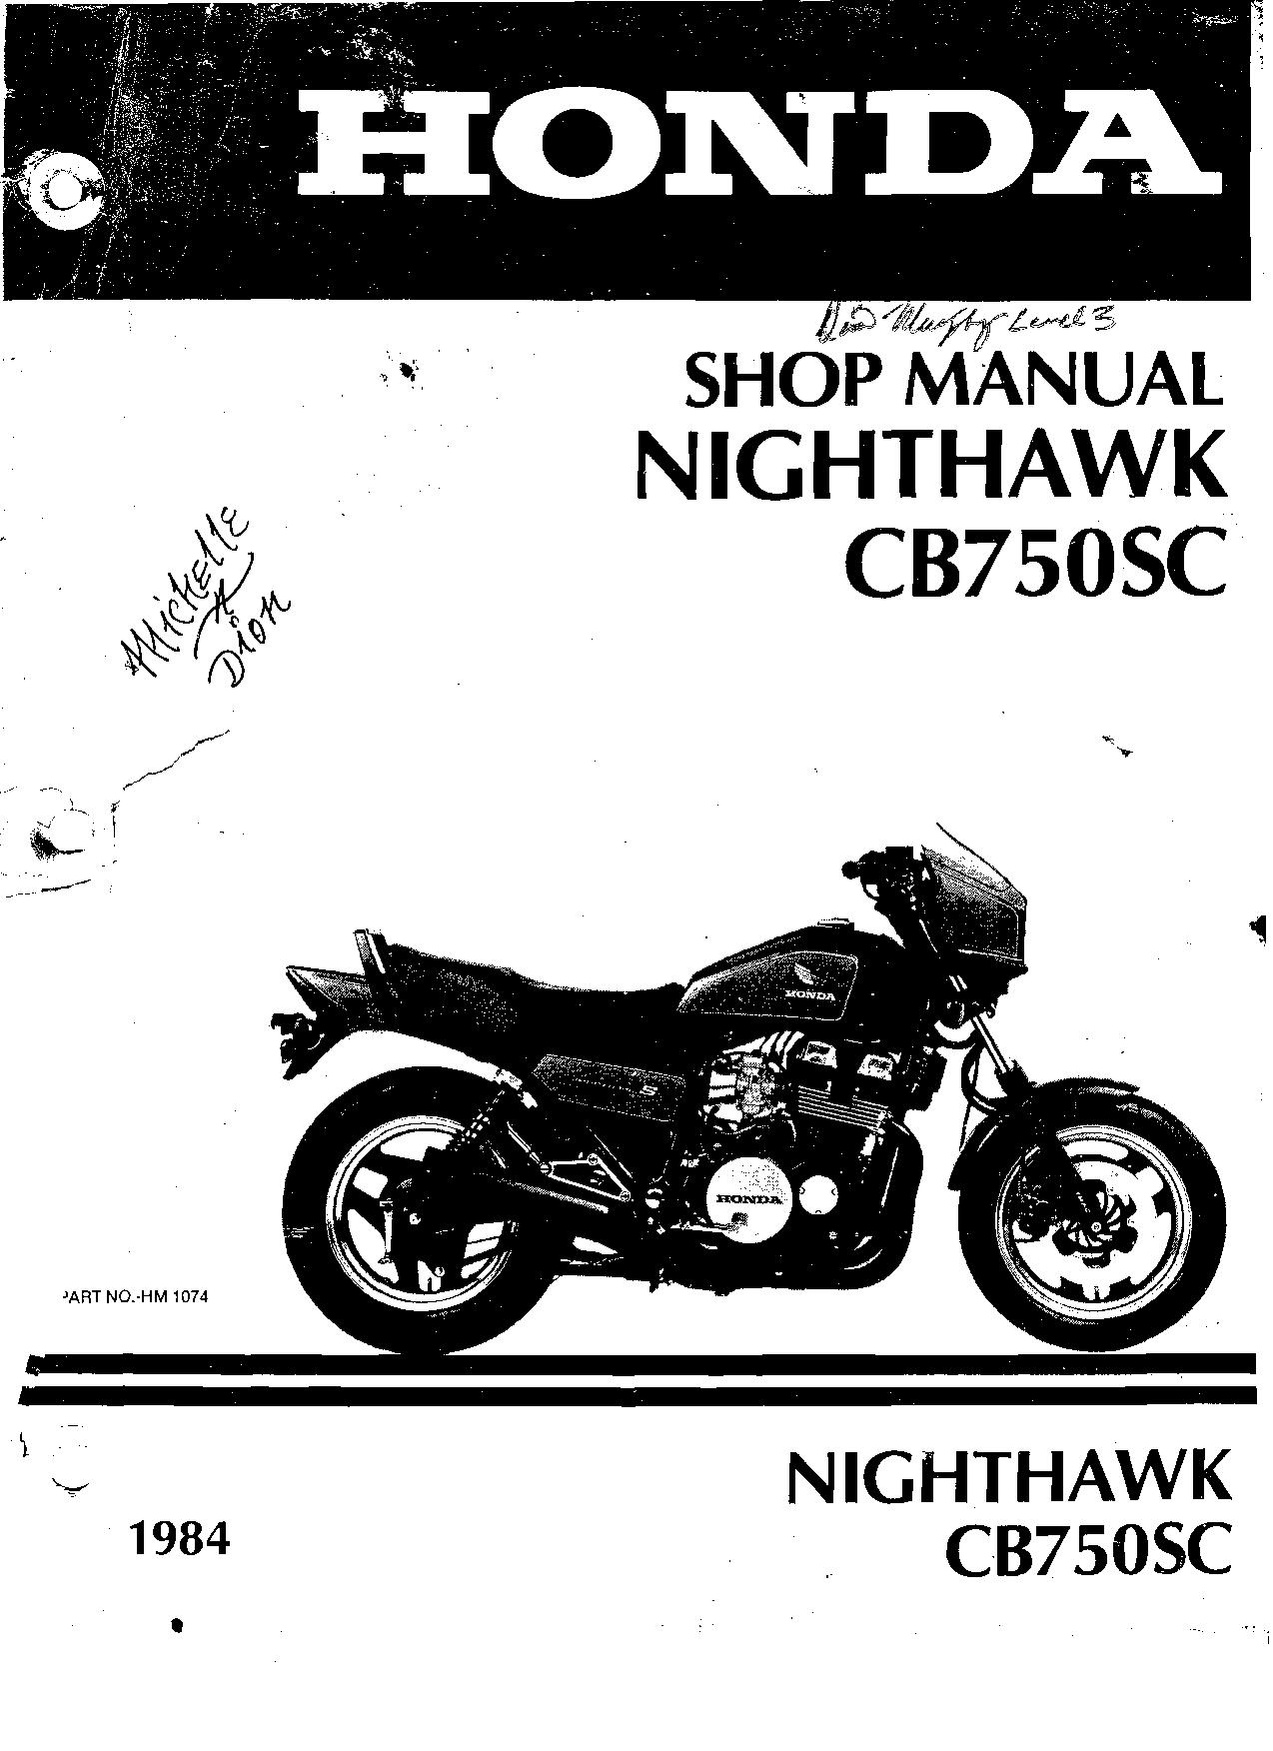 FileHonda CB750SC Nighthawk 1984 Service Manual.pdf CycleChaos